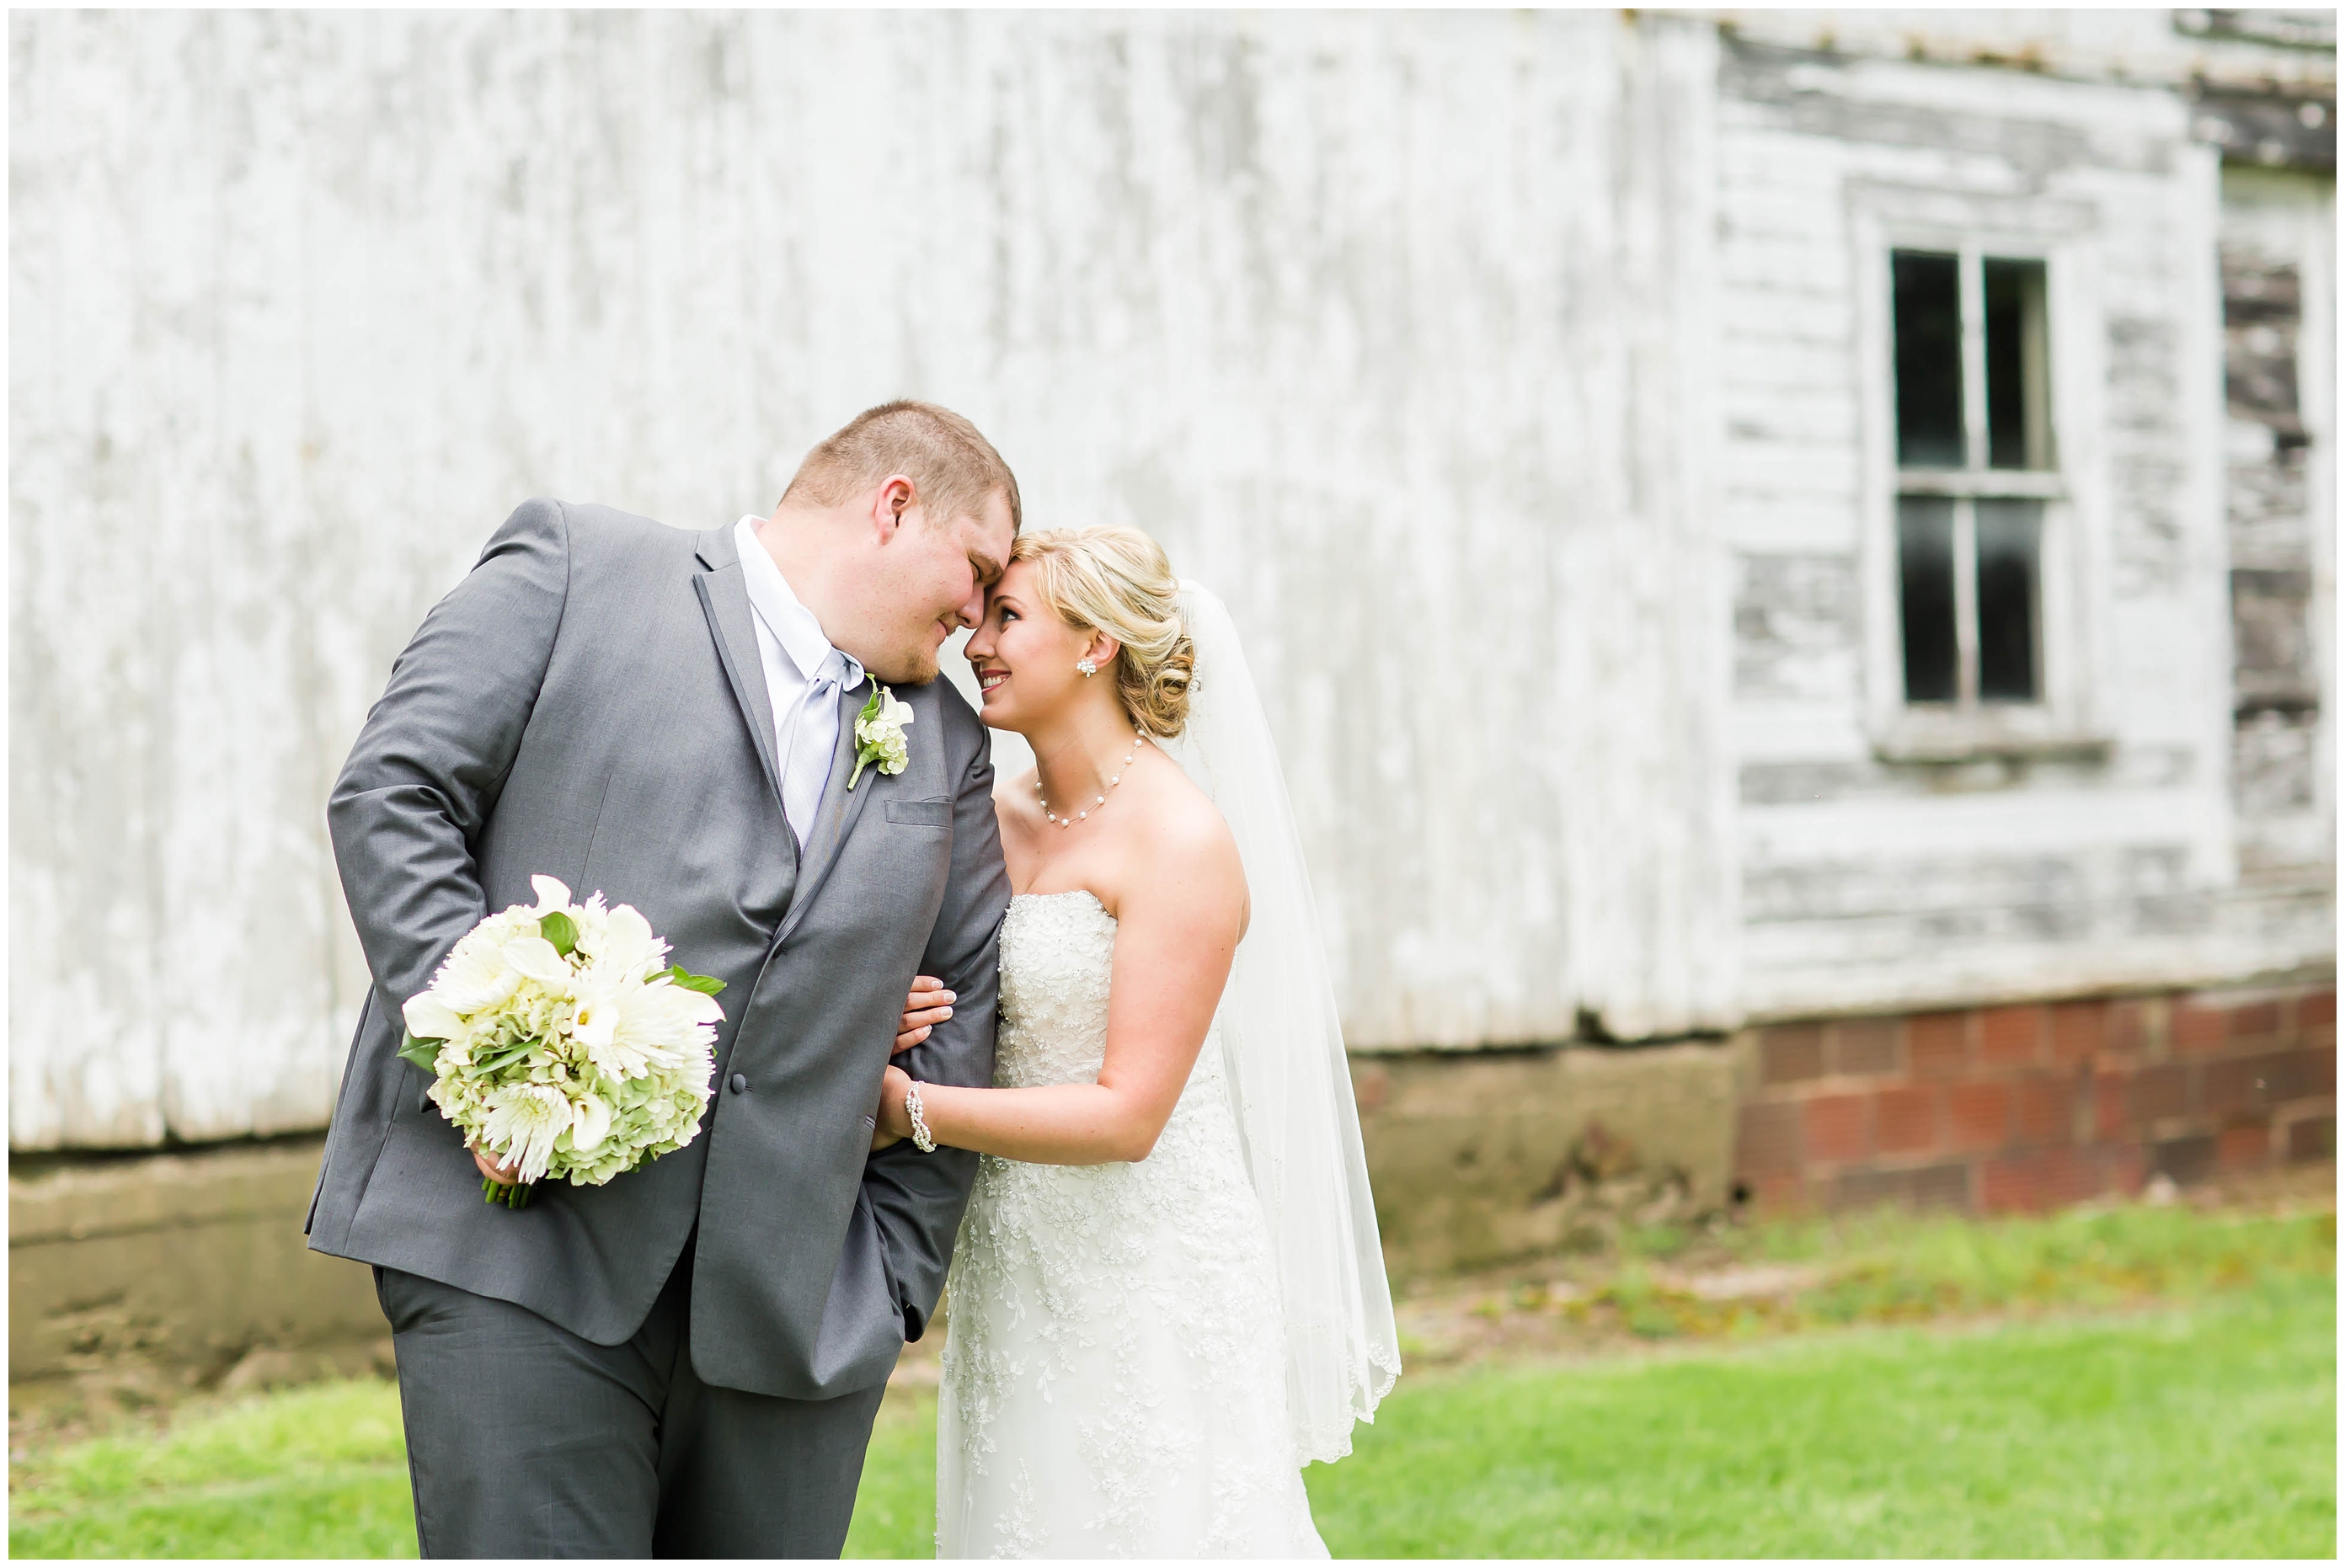 Brookside Farm Wedding, Brookside Farms Spring Wedding, Loren Jackson Photography, Photographer Akron Ohio, Cleveland Wedding Photography